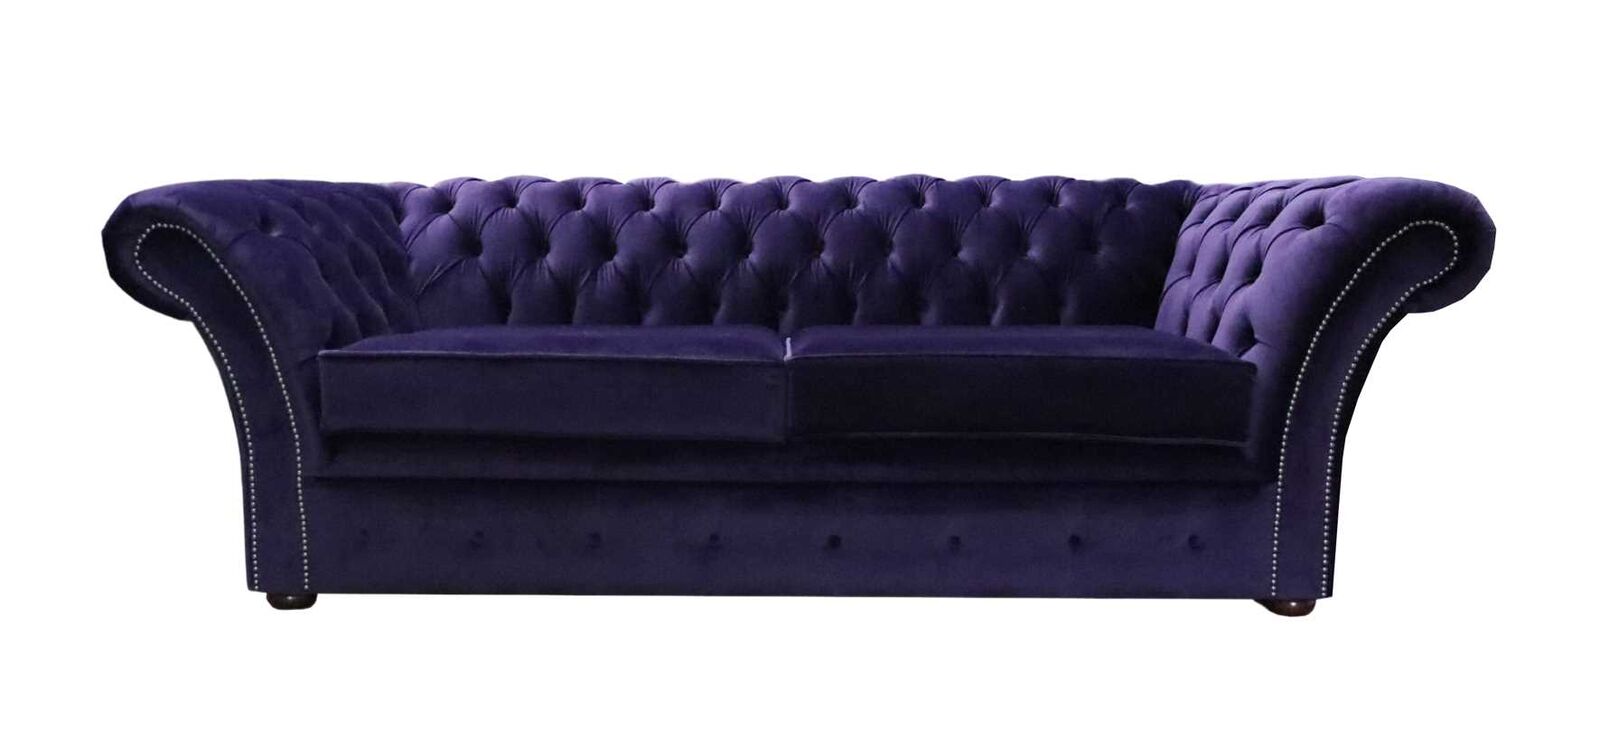 Product photograph of Amethyst Purple Velvet Chesterfield Balmoral Sofa 3 Seater from Designer Sofas 4U